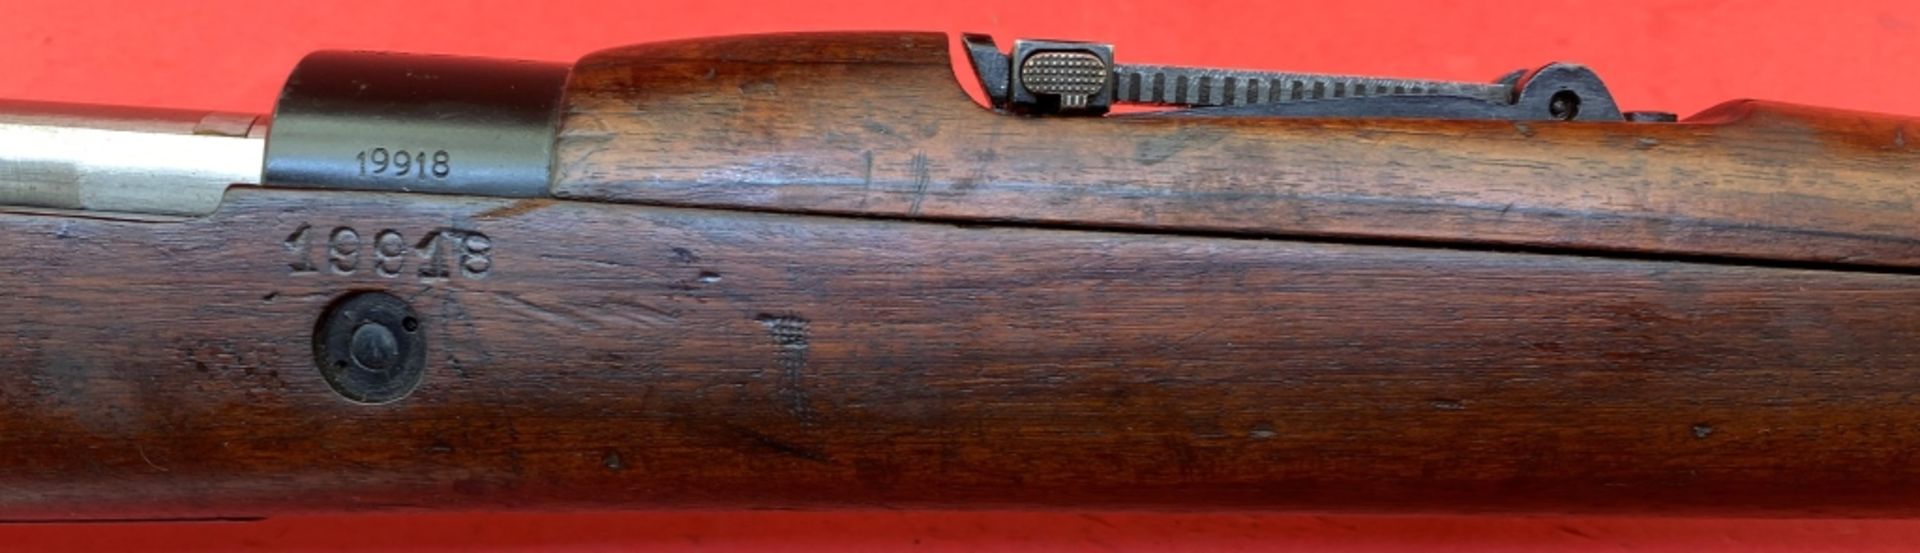 FN M1950 .30-06 Rifle - Image 4 of 12